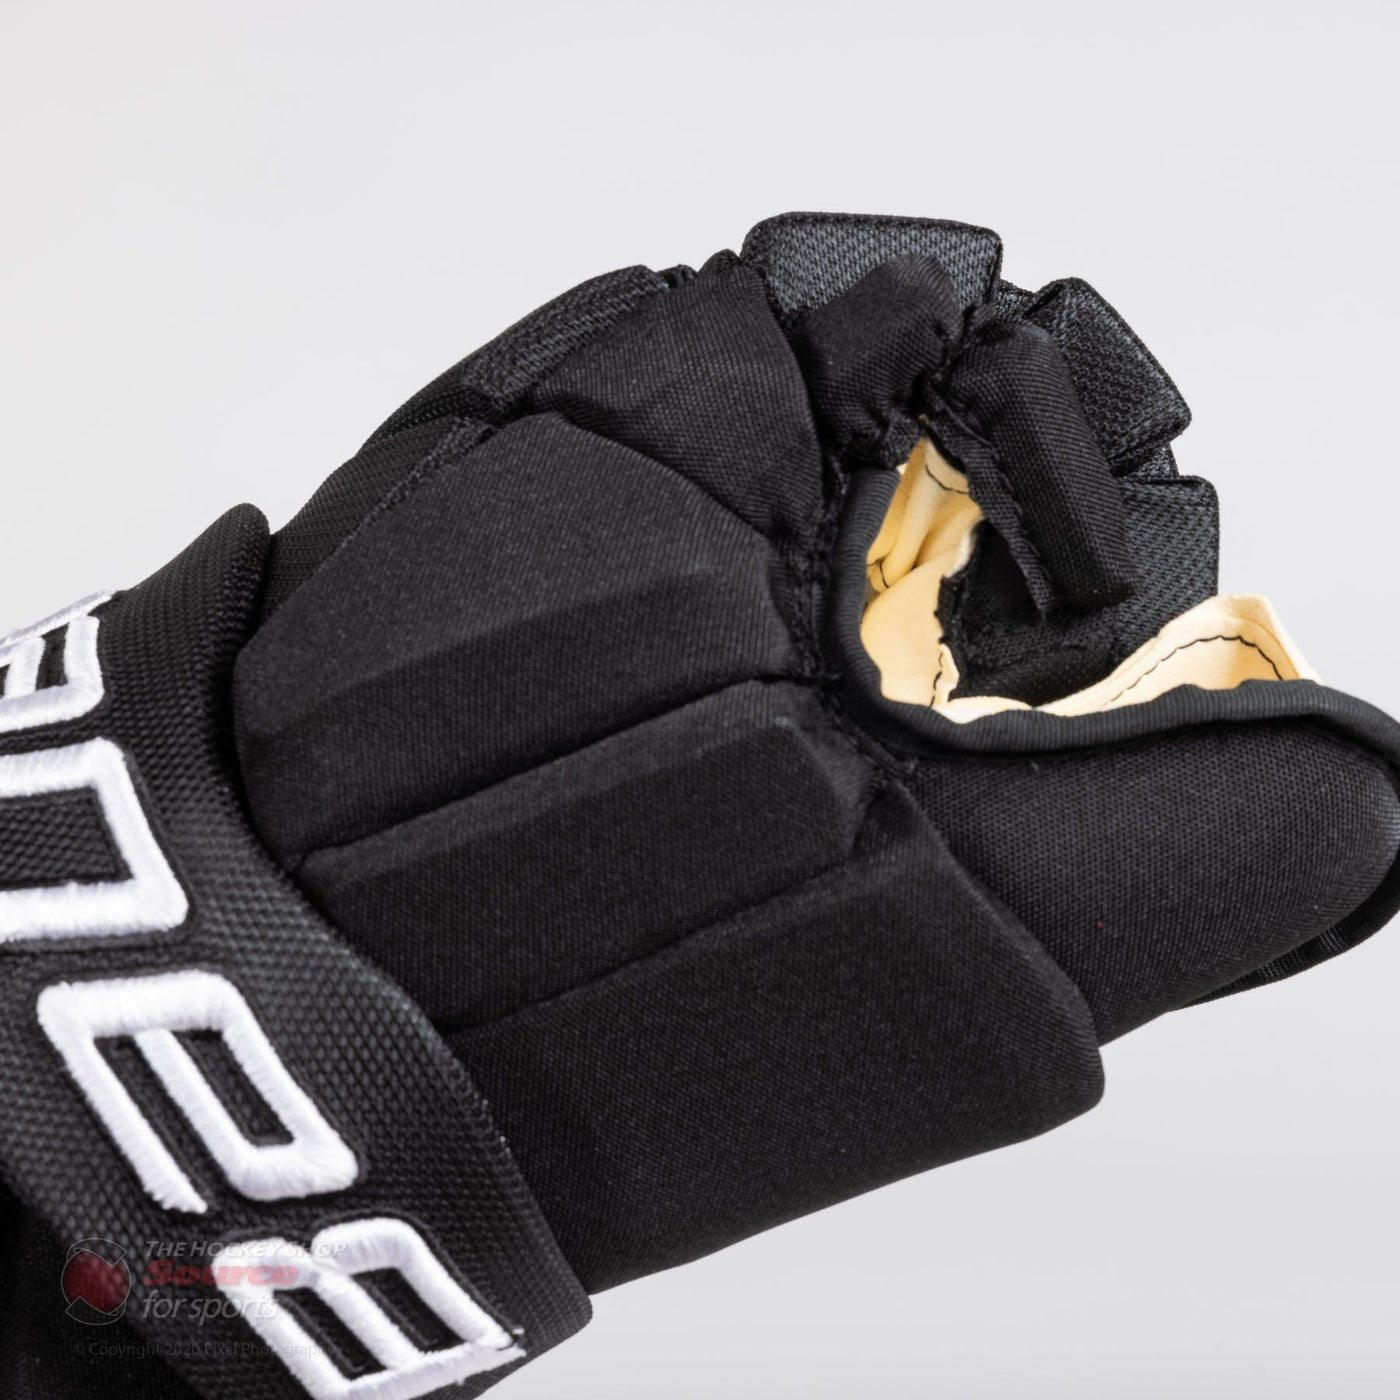 Bauer Vapor Team Pro Senior Hockey Gloves